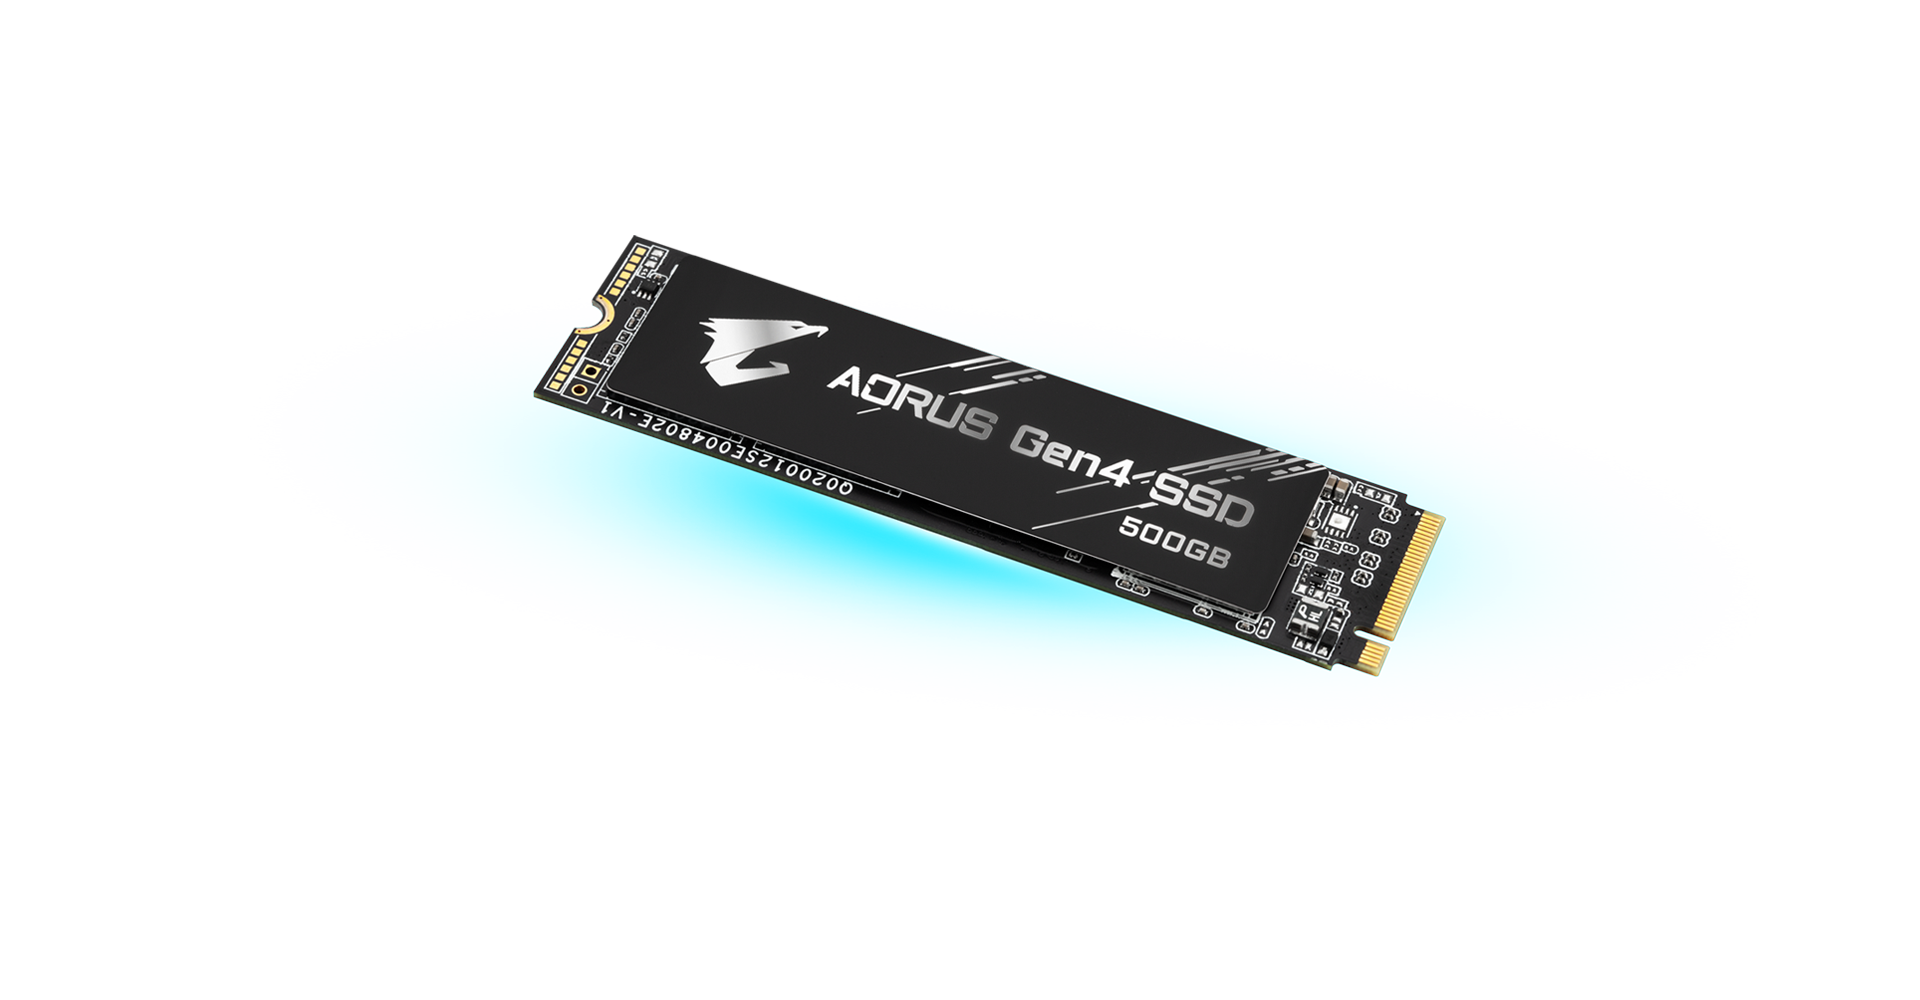 AORUS Gen4 SSD 500GB Key Features 